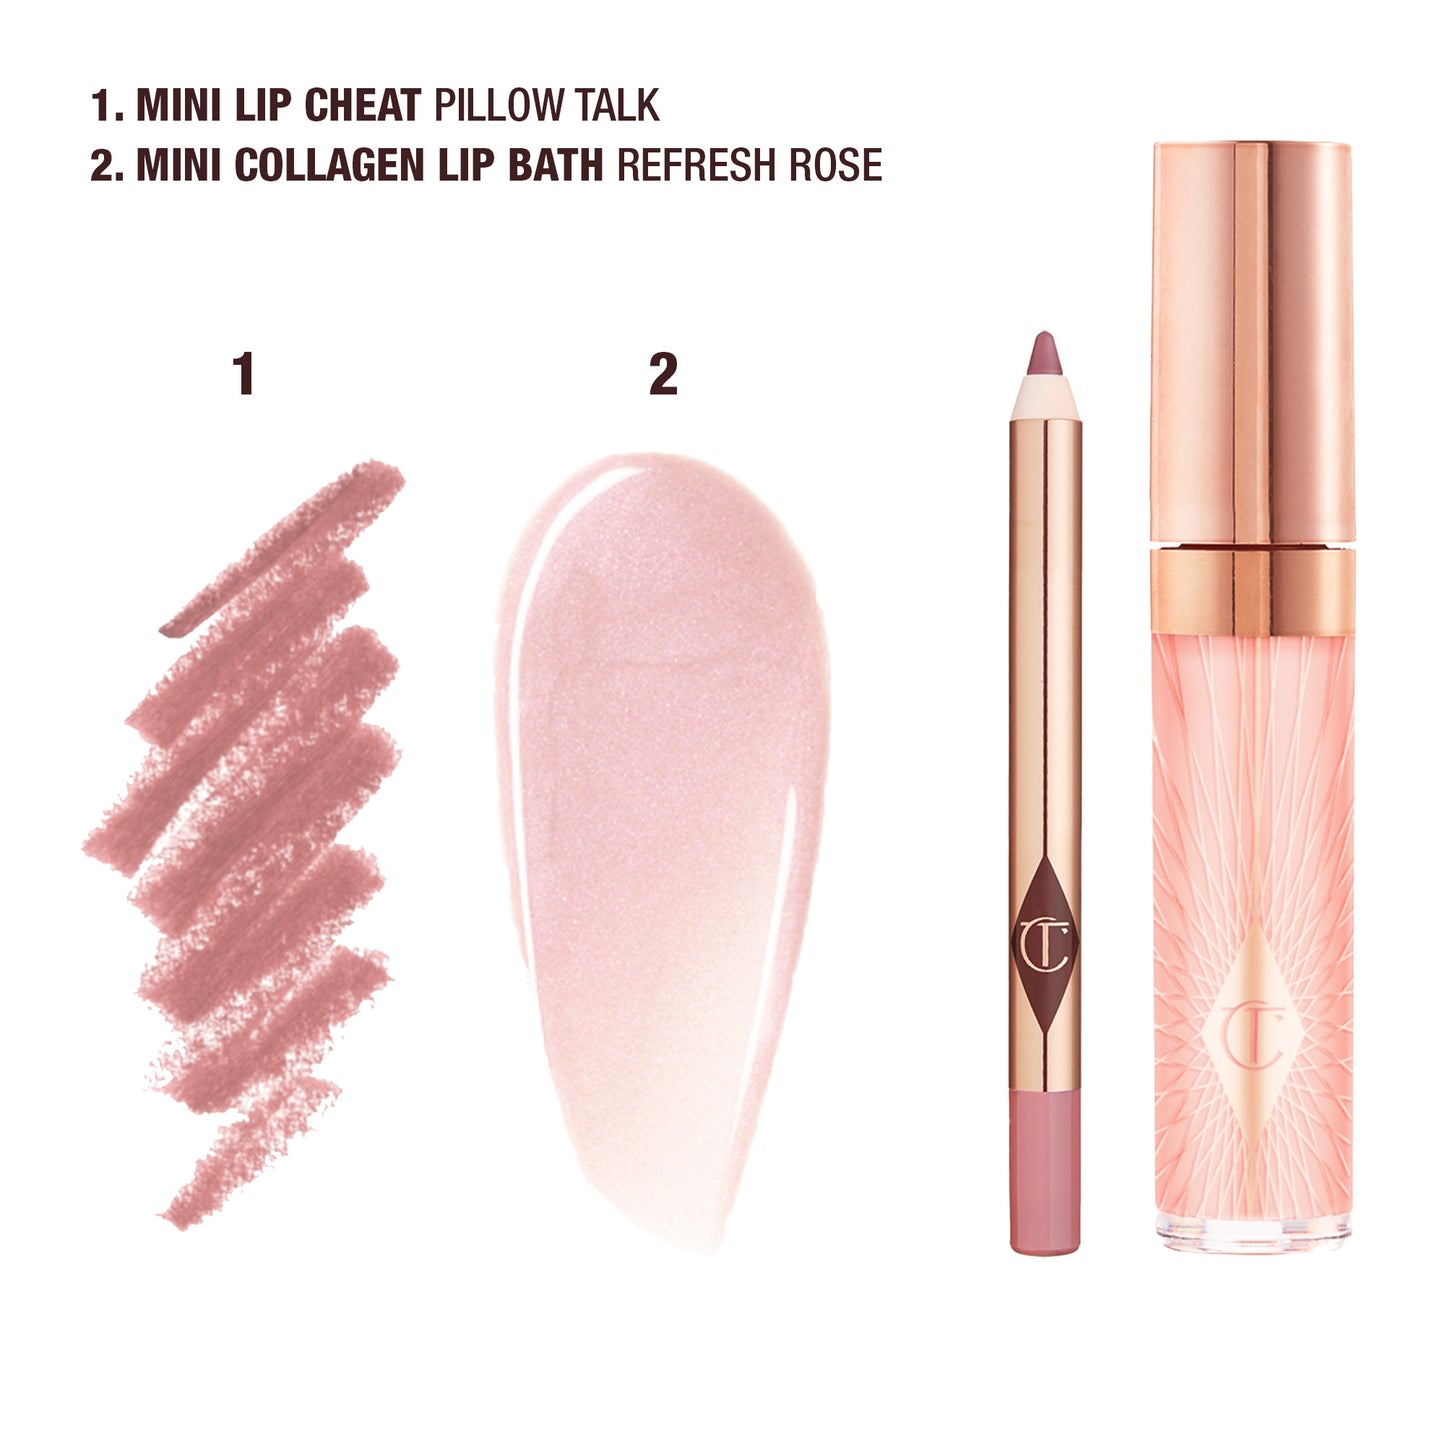 Charlotte Tilbury | Mini Glossy Pink Lip Gloss + Lip Liner Set